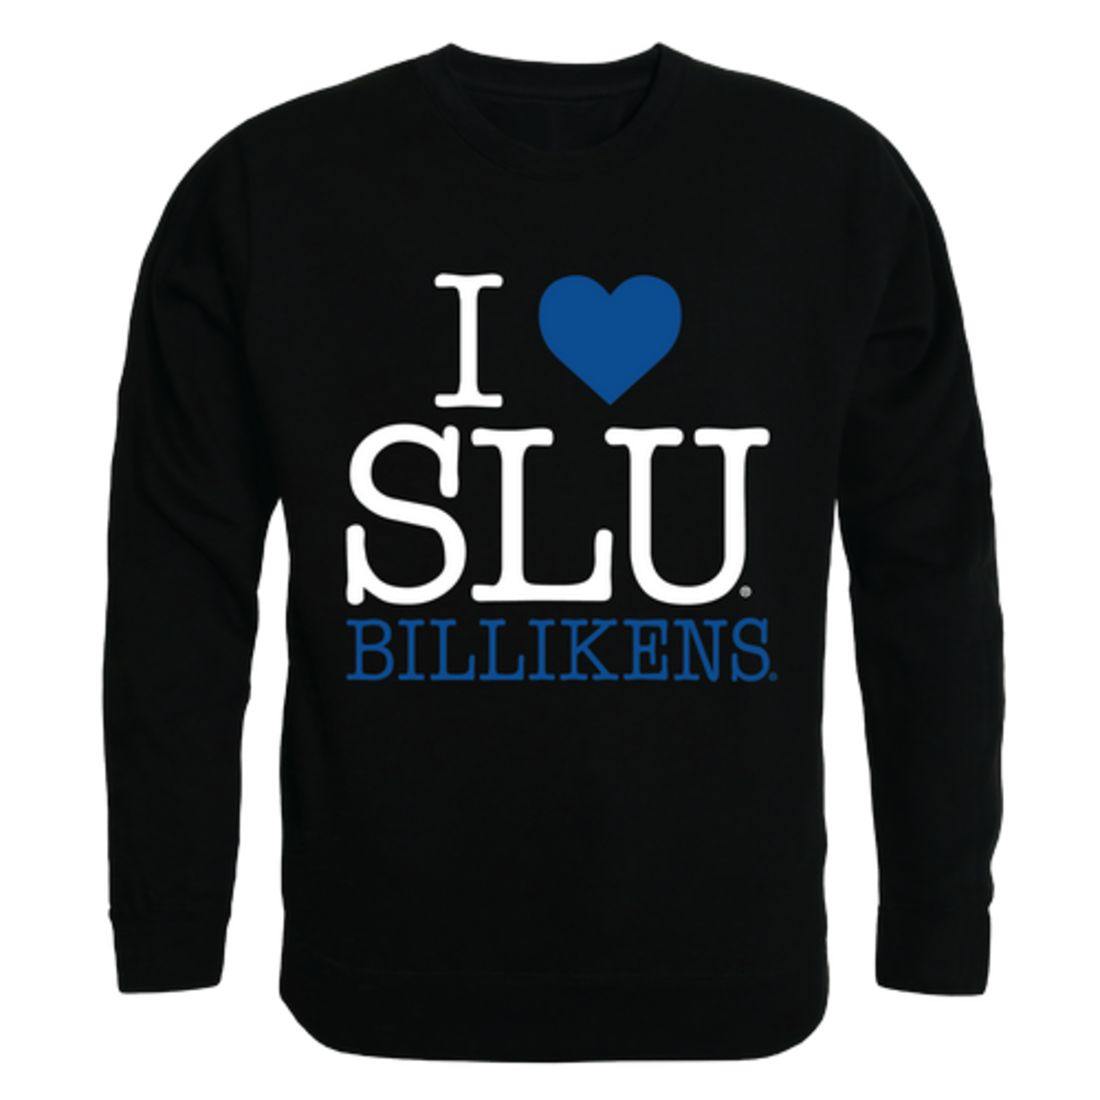 I Love SLU Saint Louis University Billikens Crewneck Pullover Sweatshirt Sweater-Campus-Wardrobe